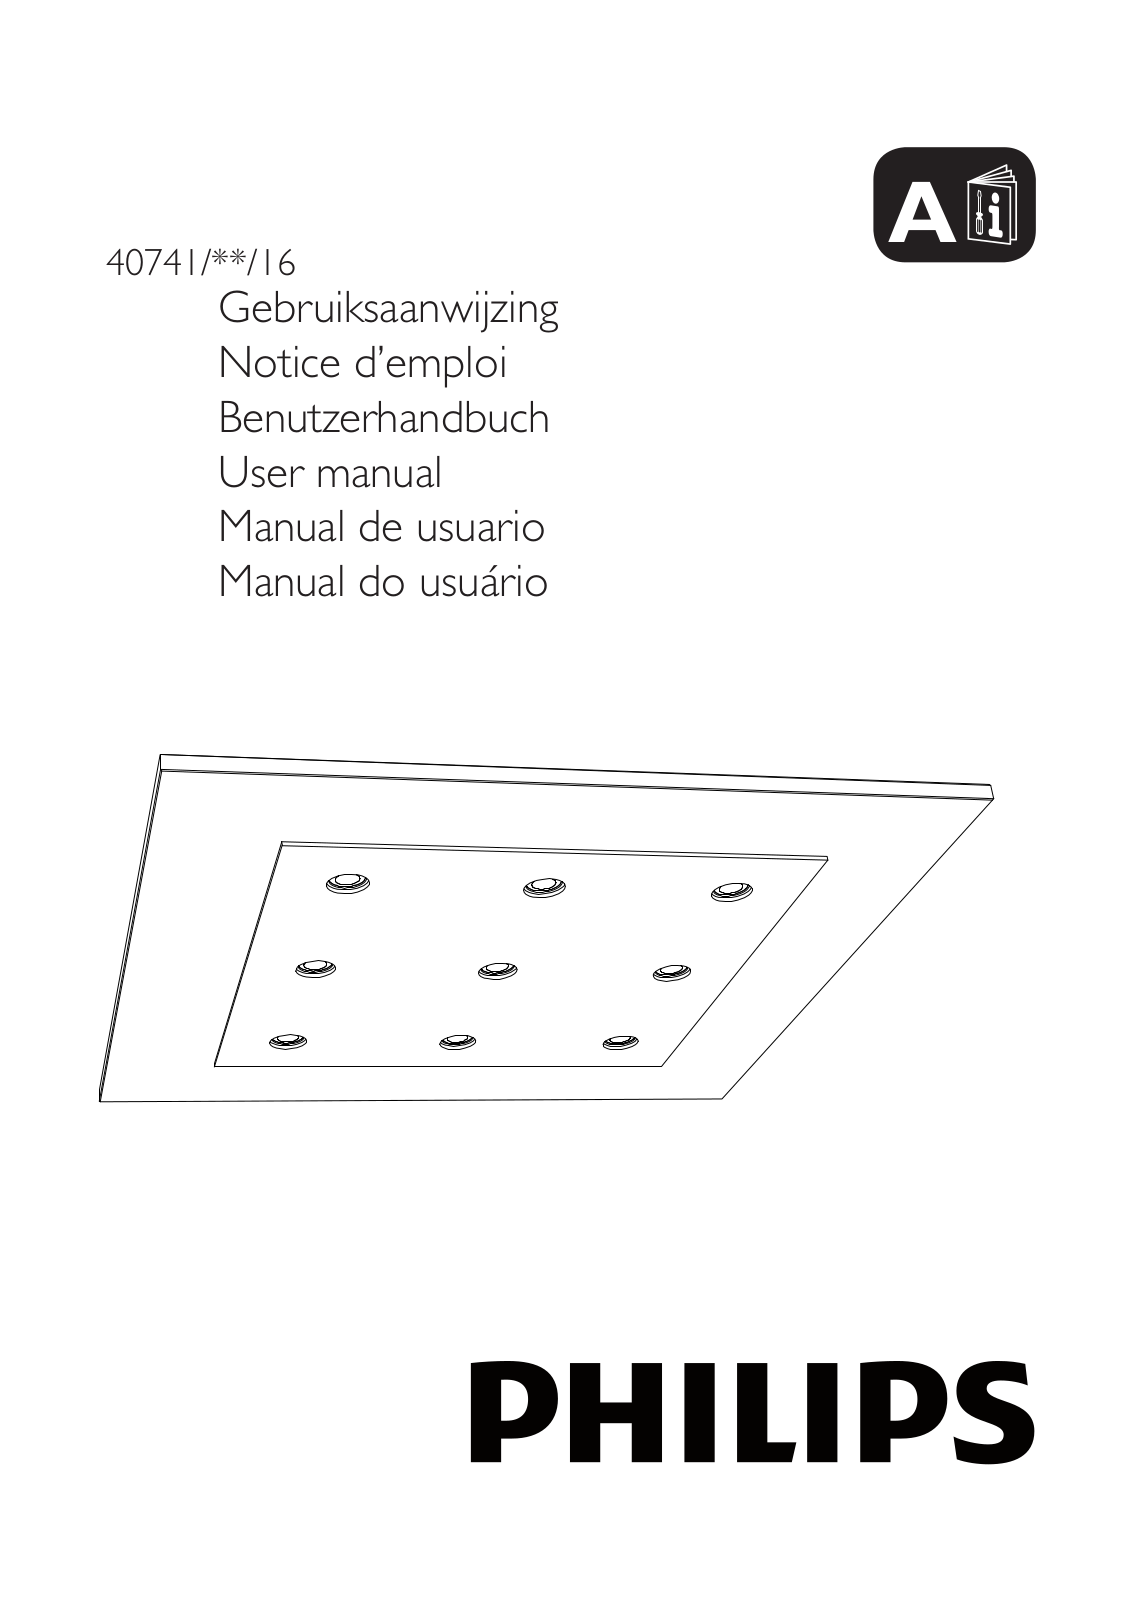 Philips 407411716, 407411116 User Manual